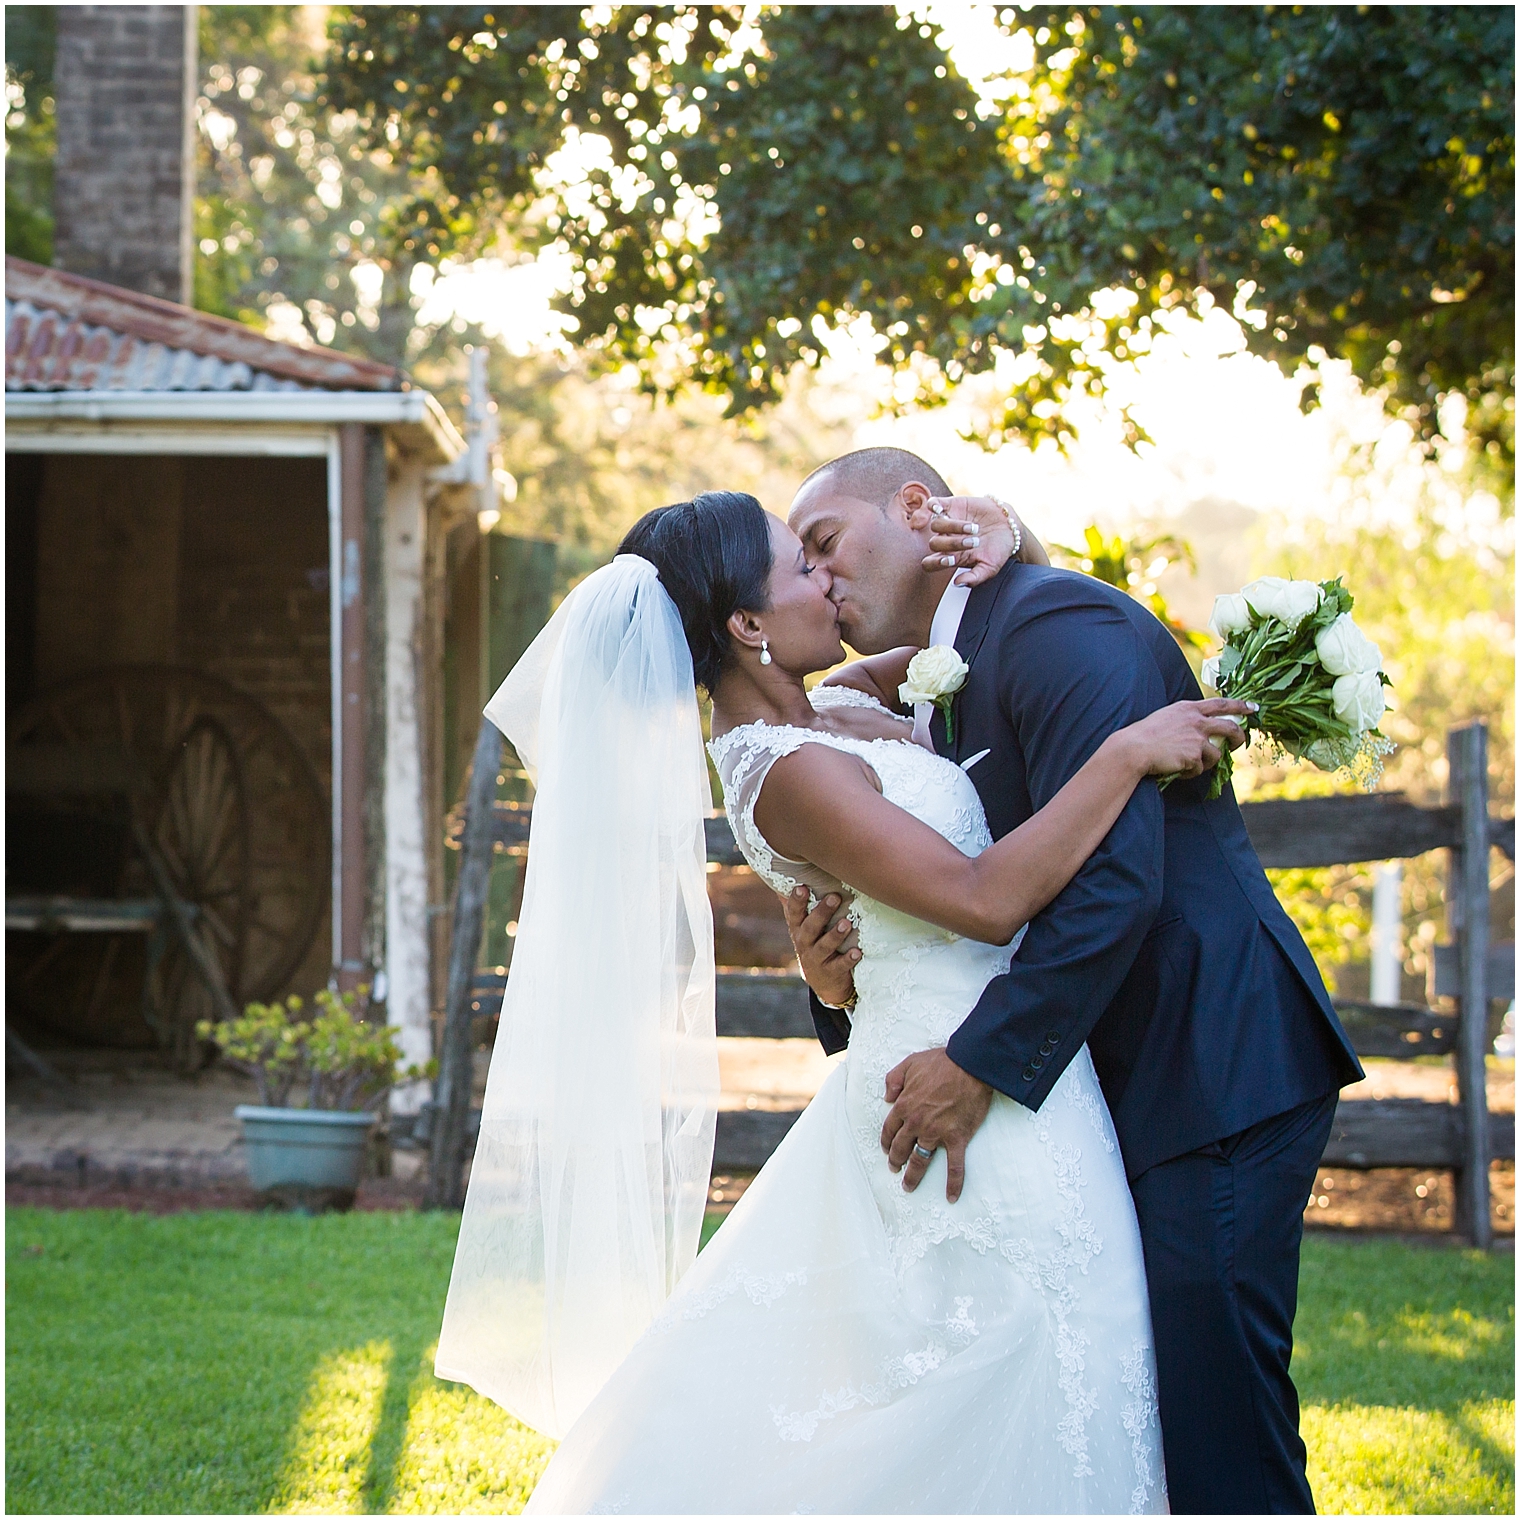 Sydney Wedding Photographer, The Kiss, Mr & Mrs